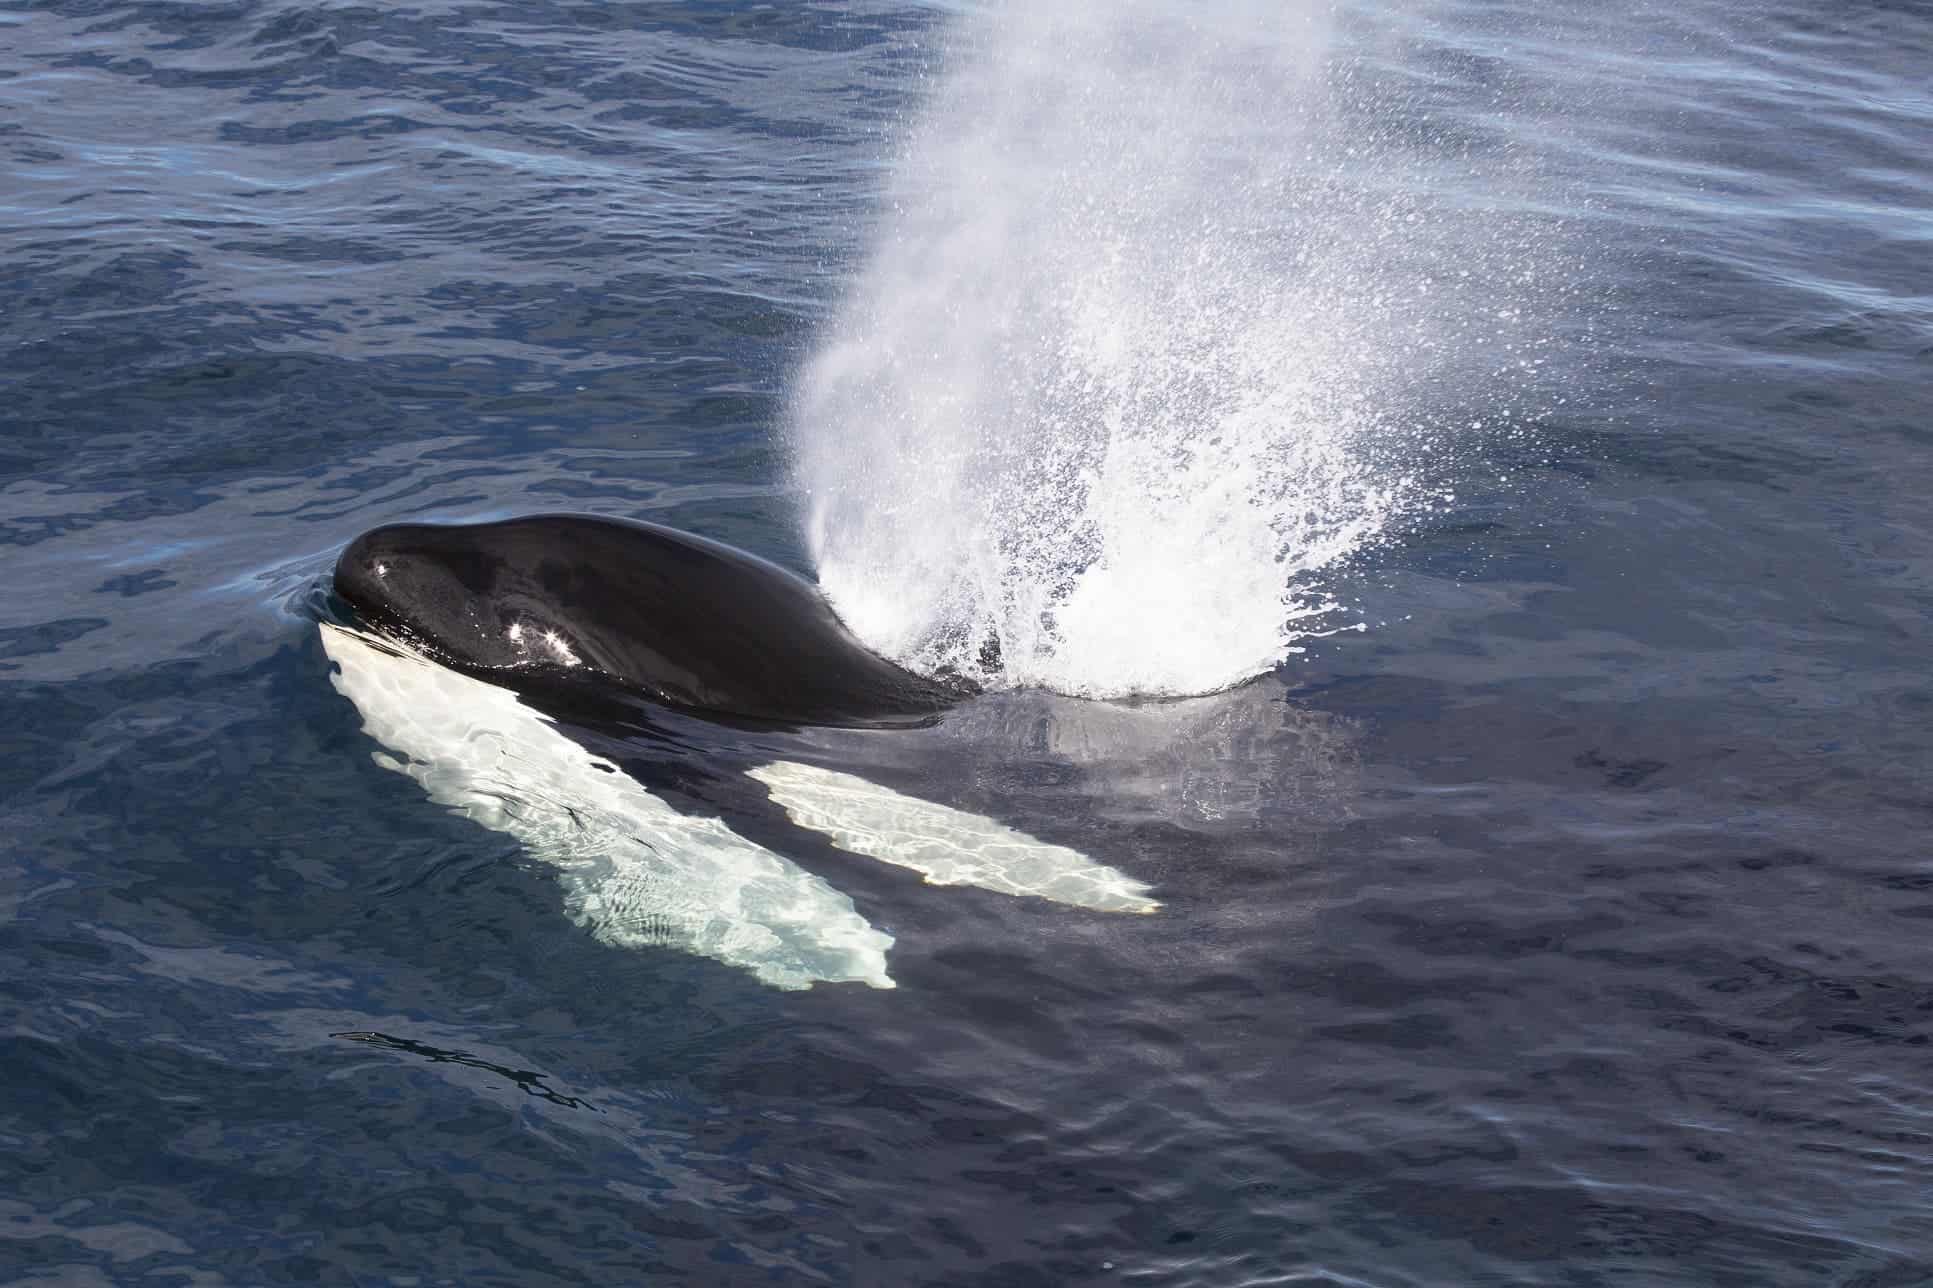 Image credits: Norwegian Orca Survey